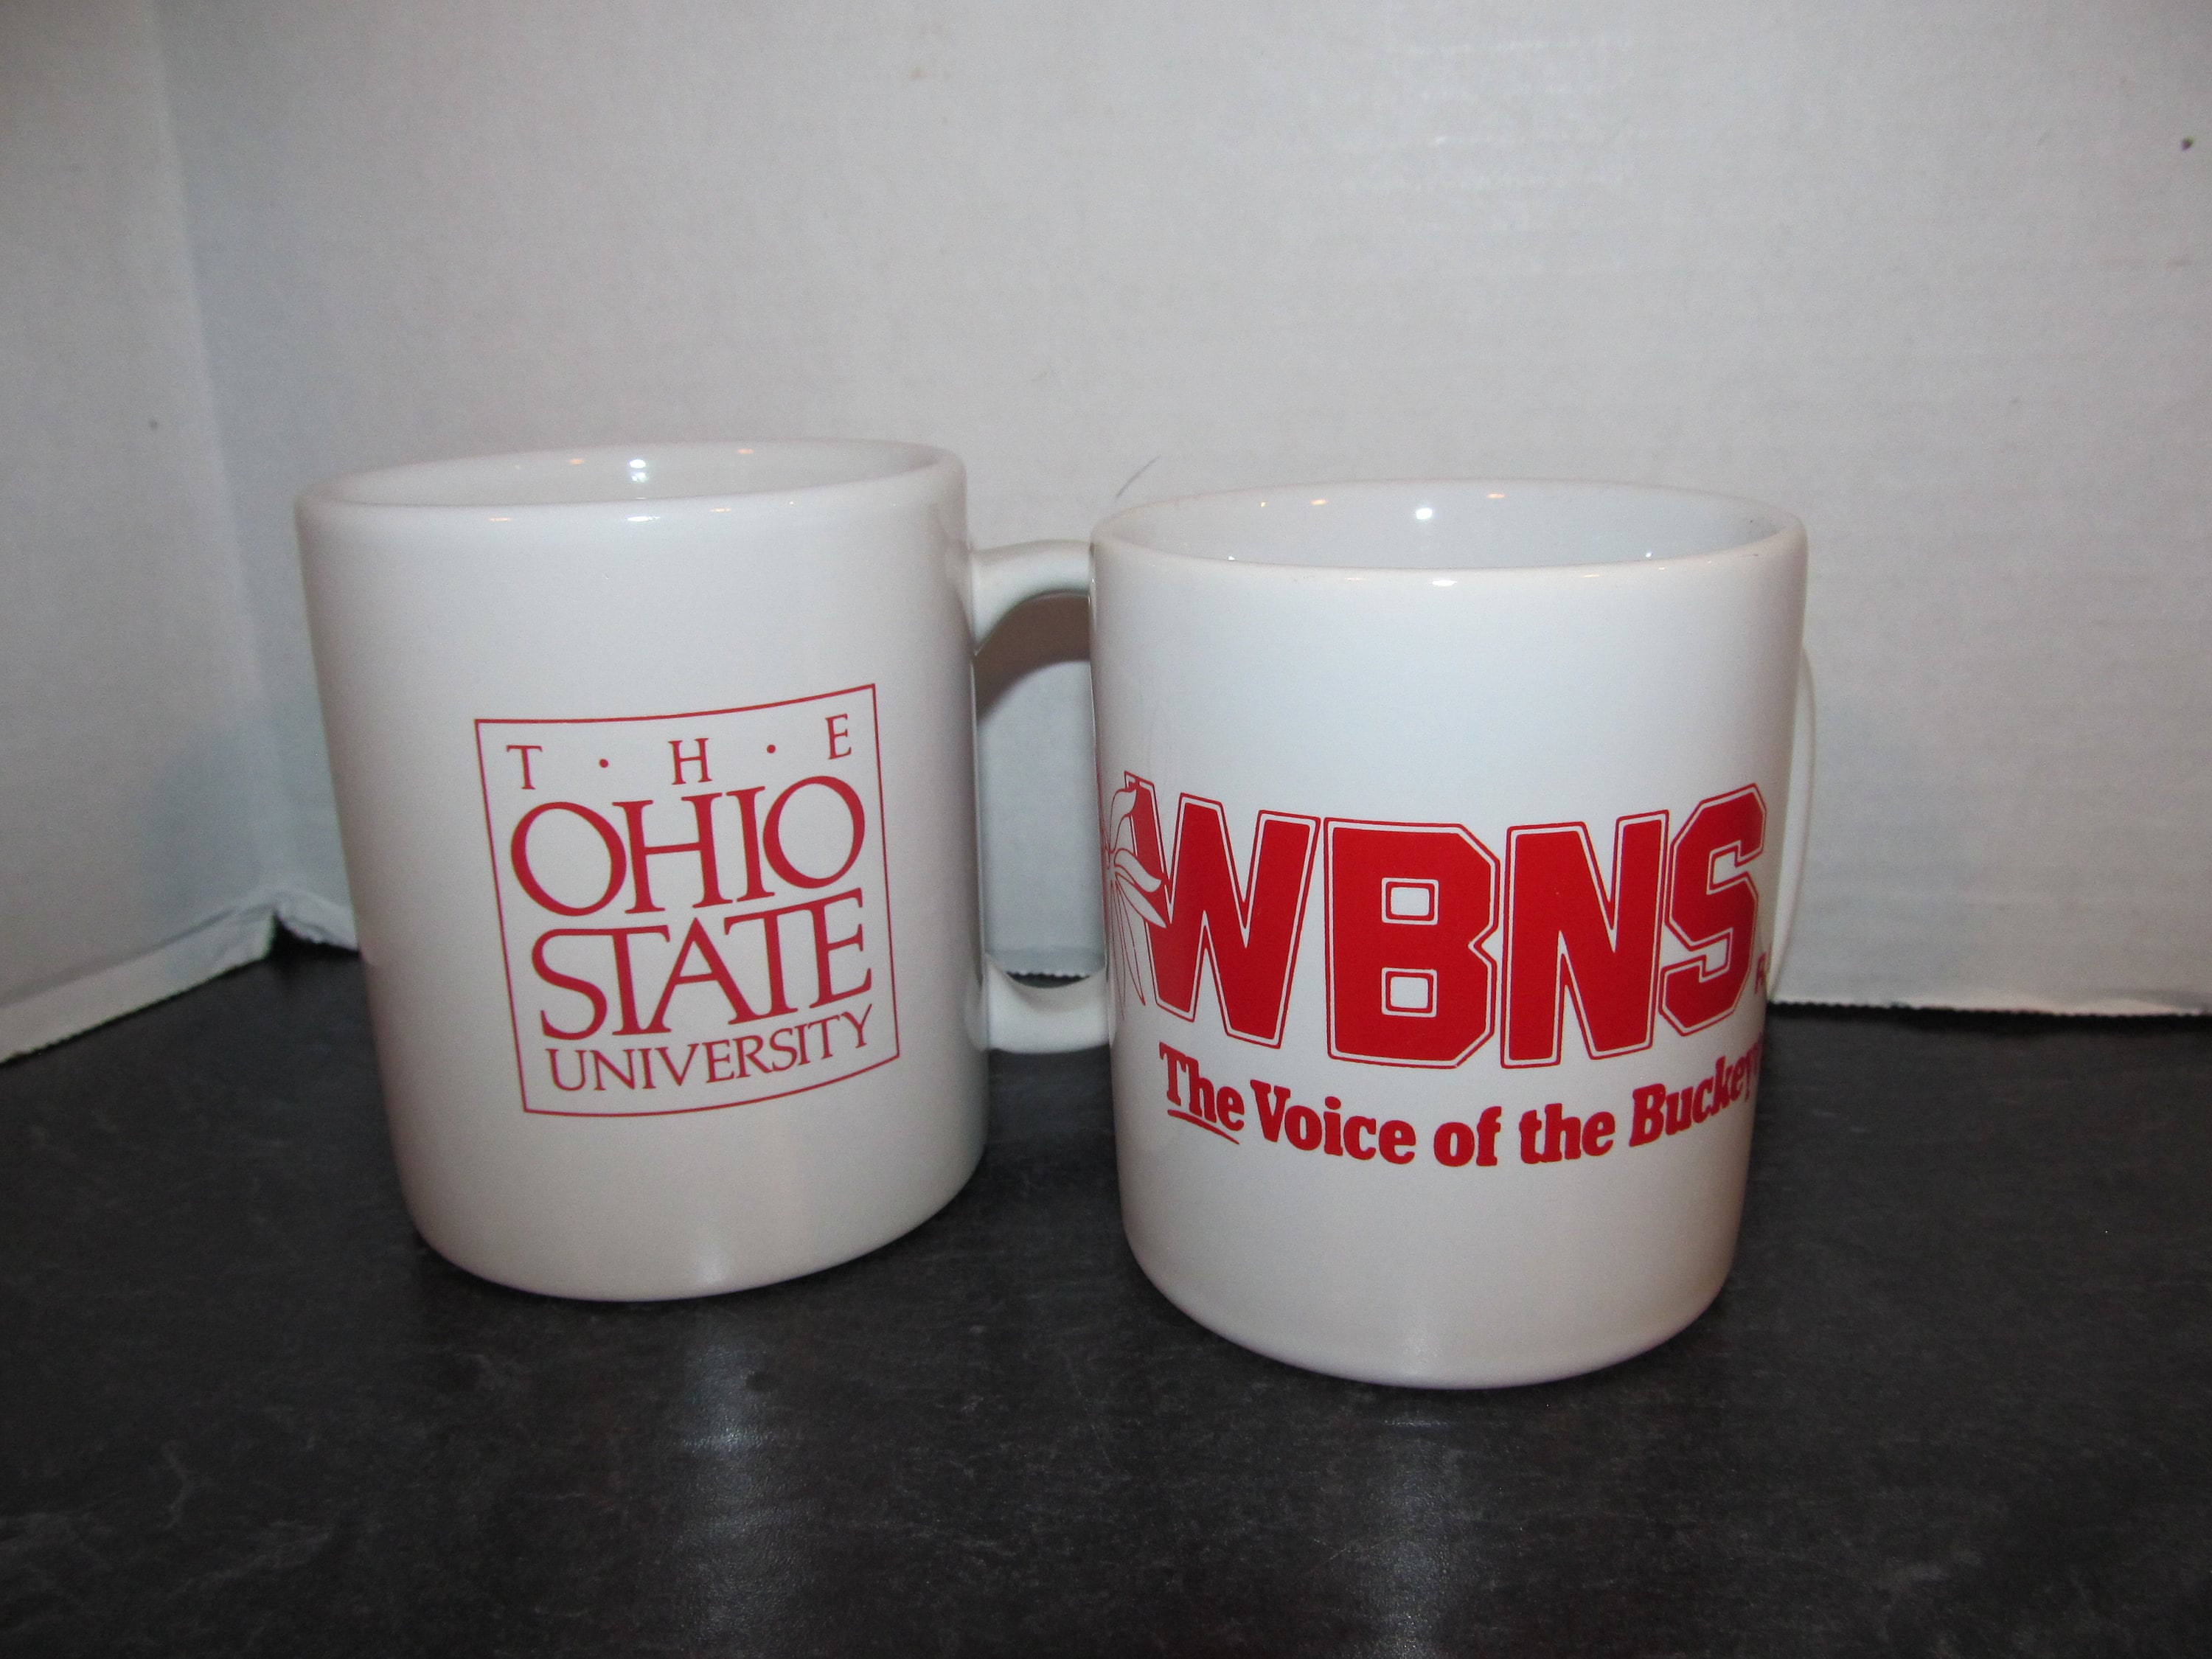 NFL Team Logo Ohio State Buckeyes Cup Coffee Mug 13oz